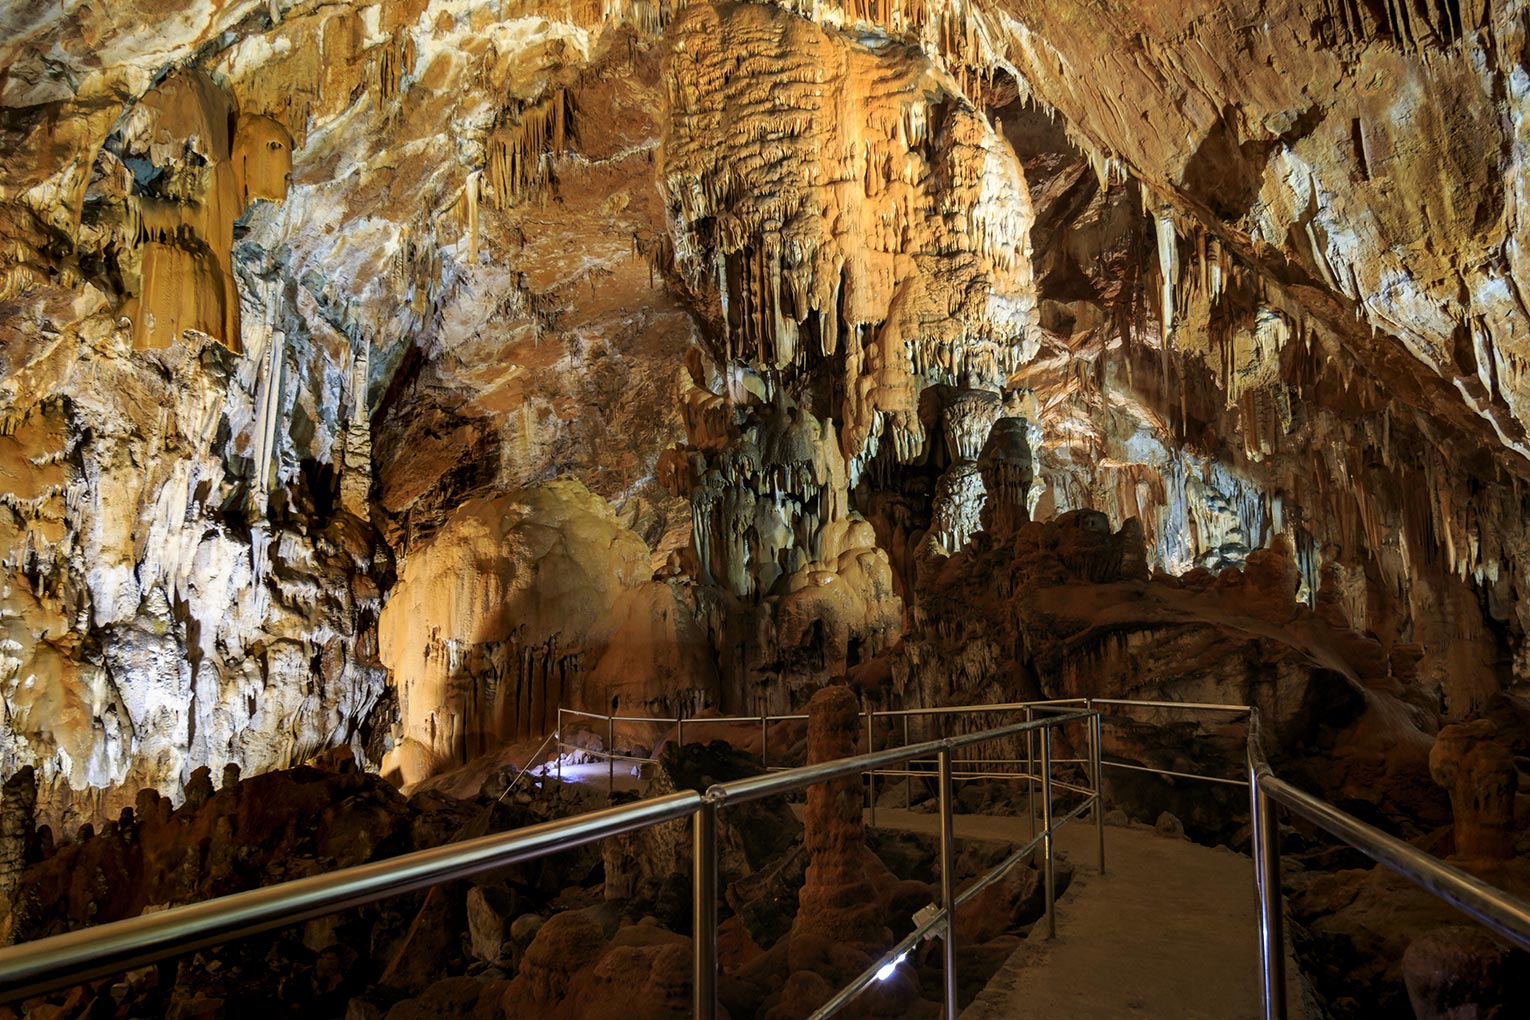 Die Höhle Manita peć im Nationalpark Paklenica